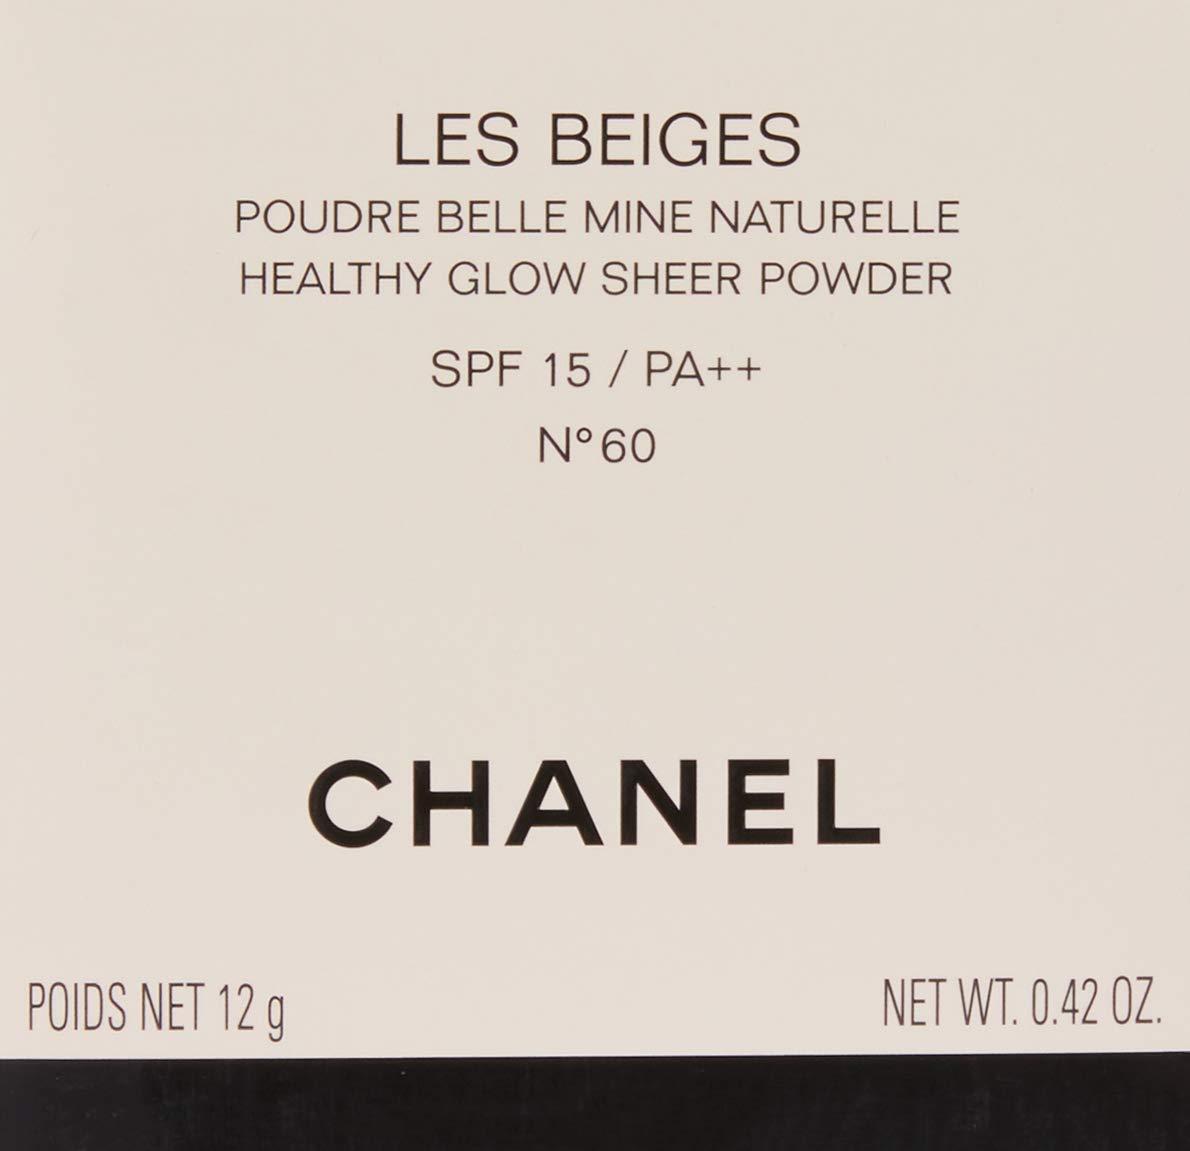 Chanel - Les Beiges Healthy Glow Sheer Powder SPF 15 - No. 60 - 12g/0.4oz